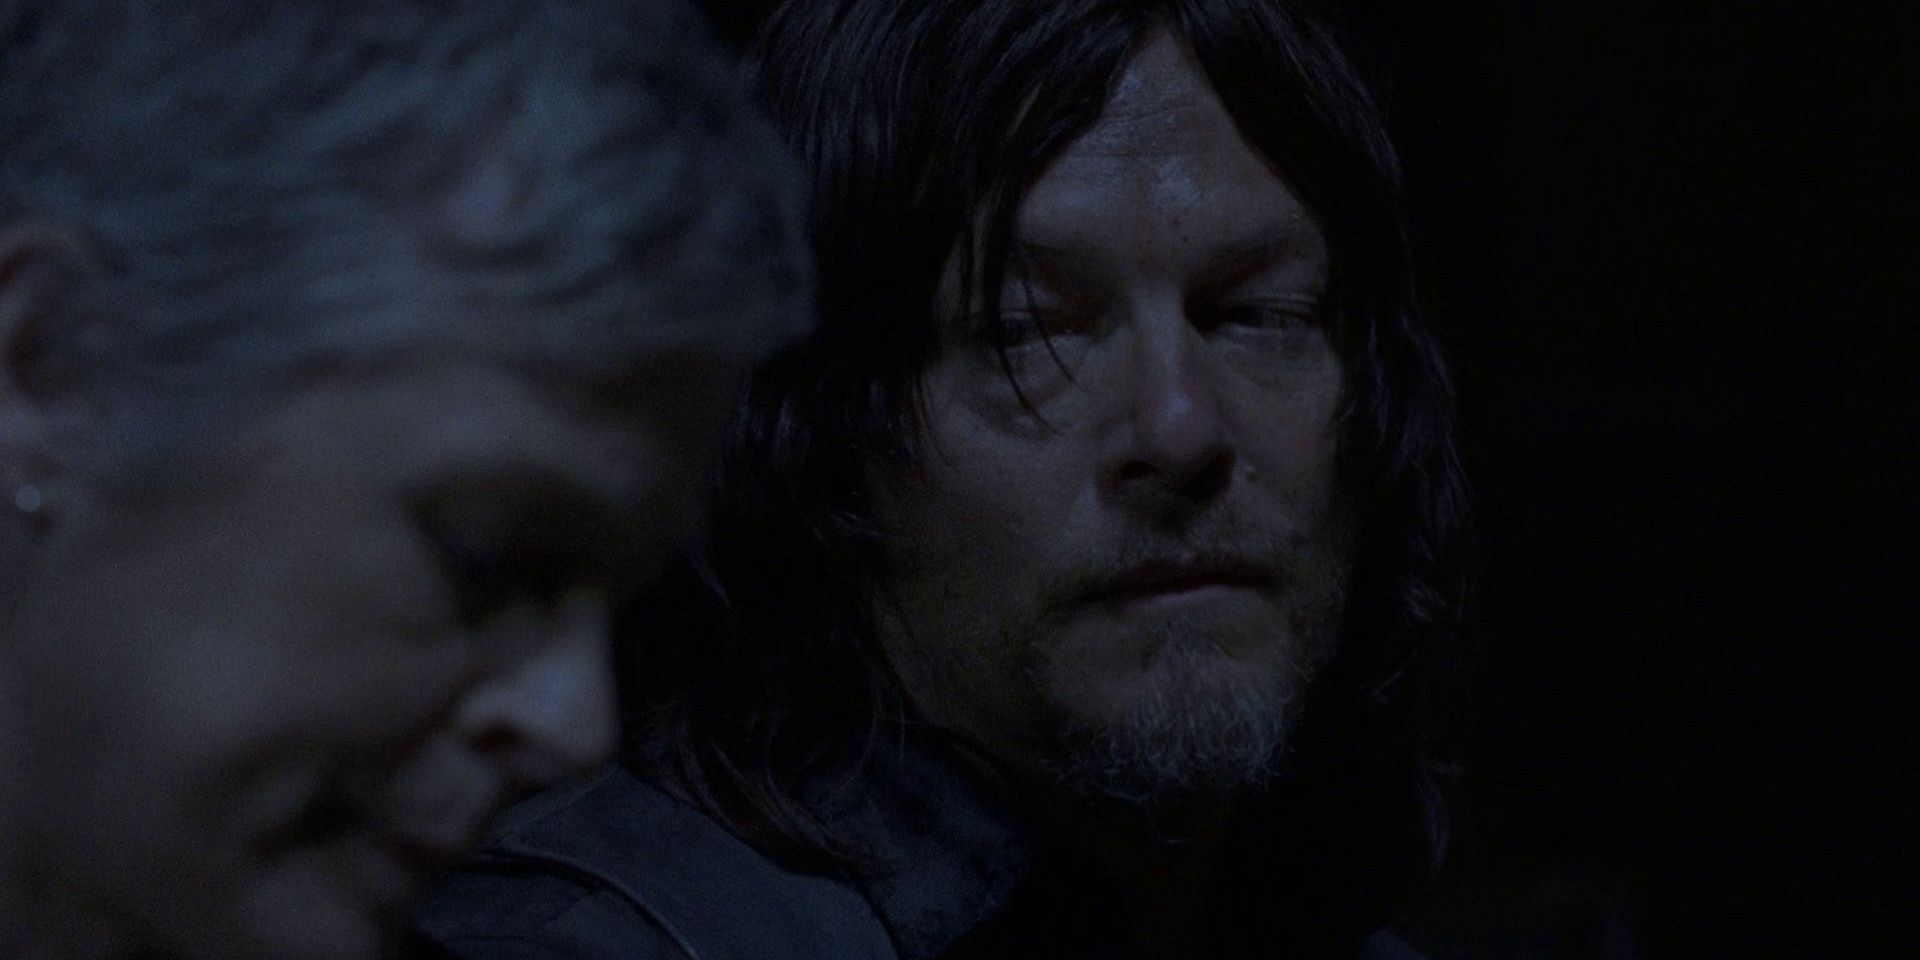 Daryl and Carol talk in the dark in The Walking Dead